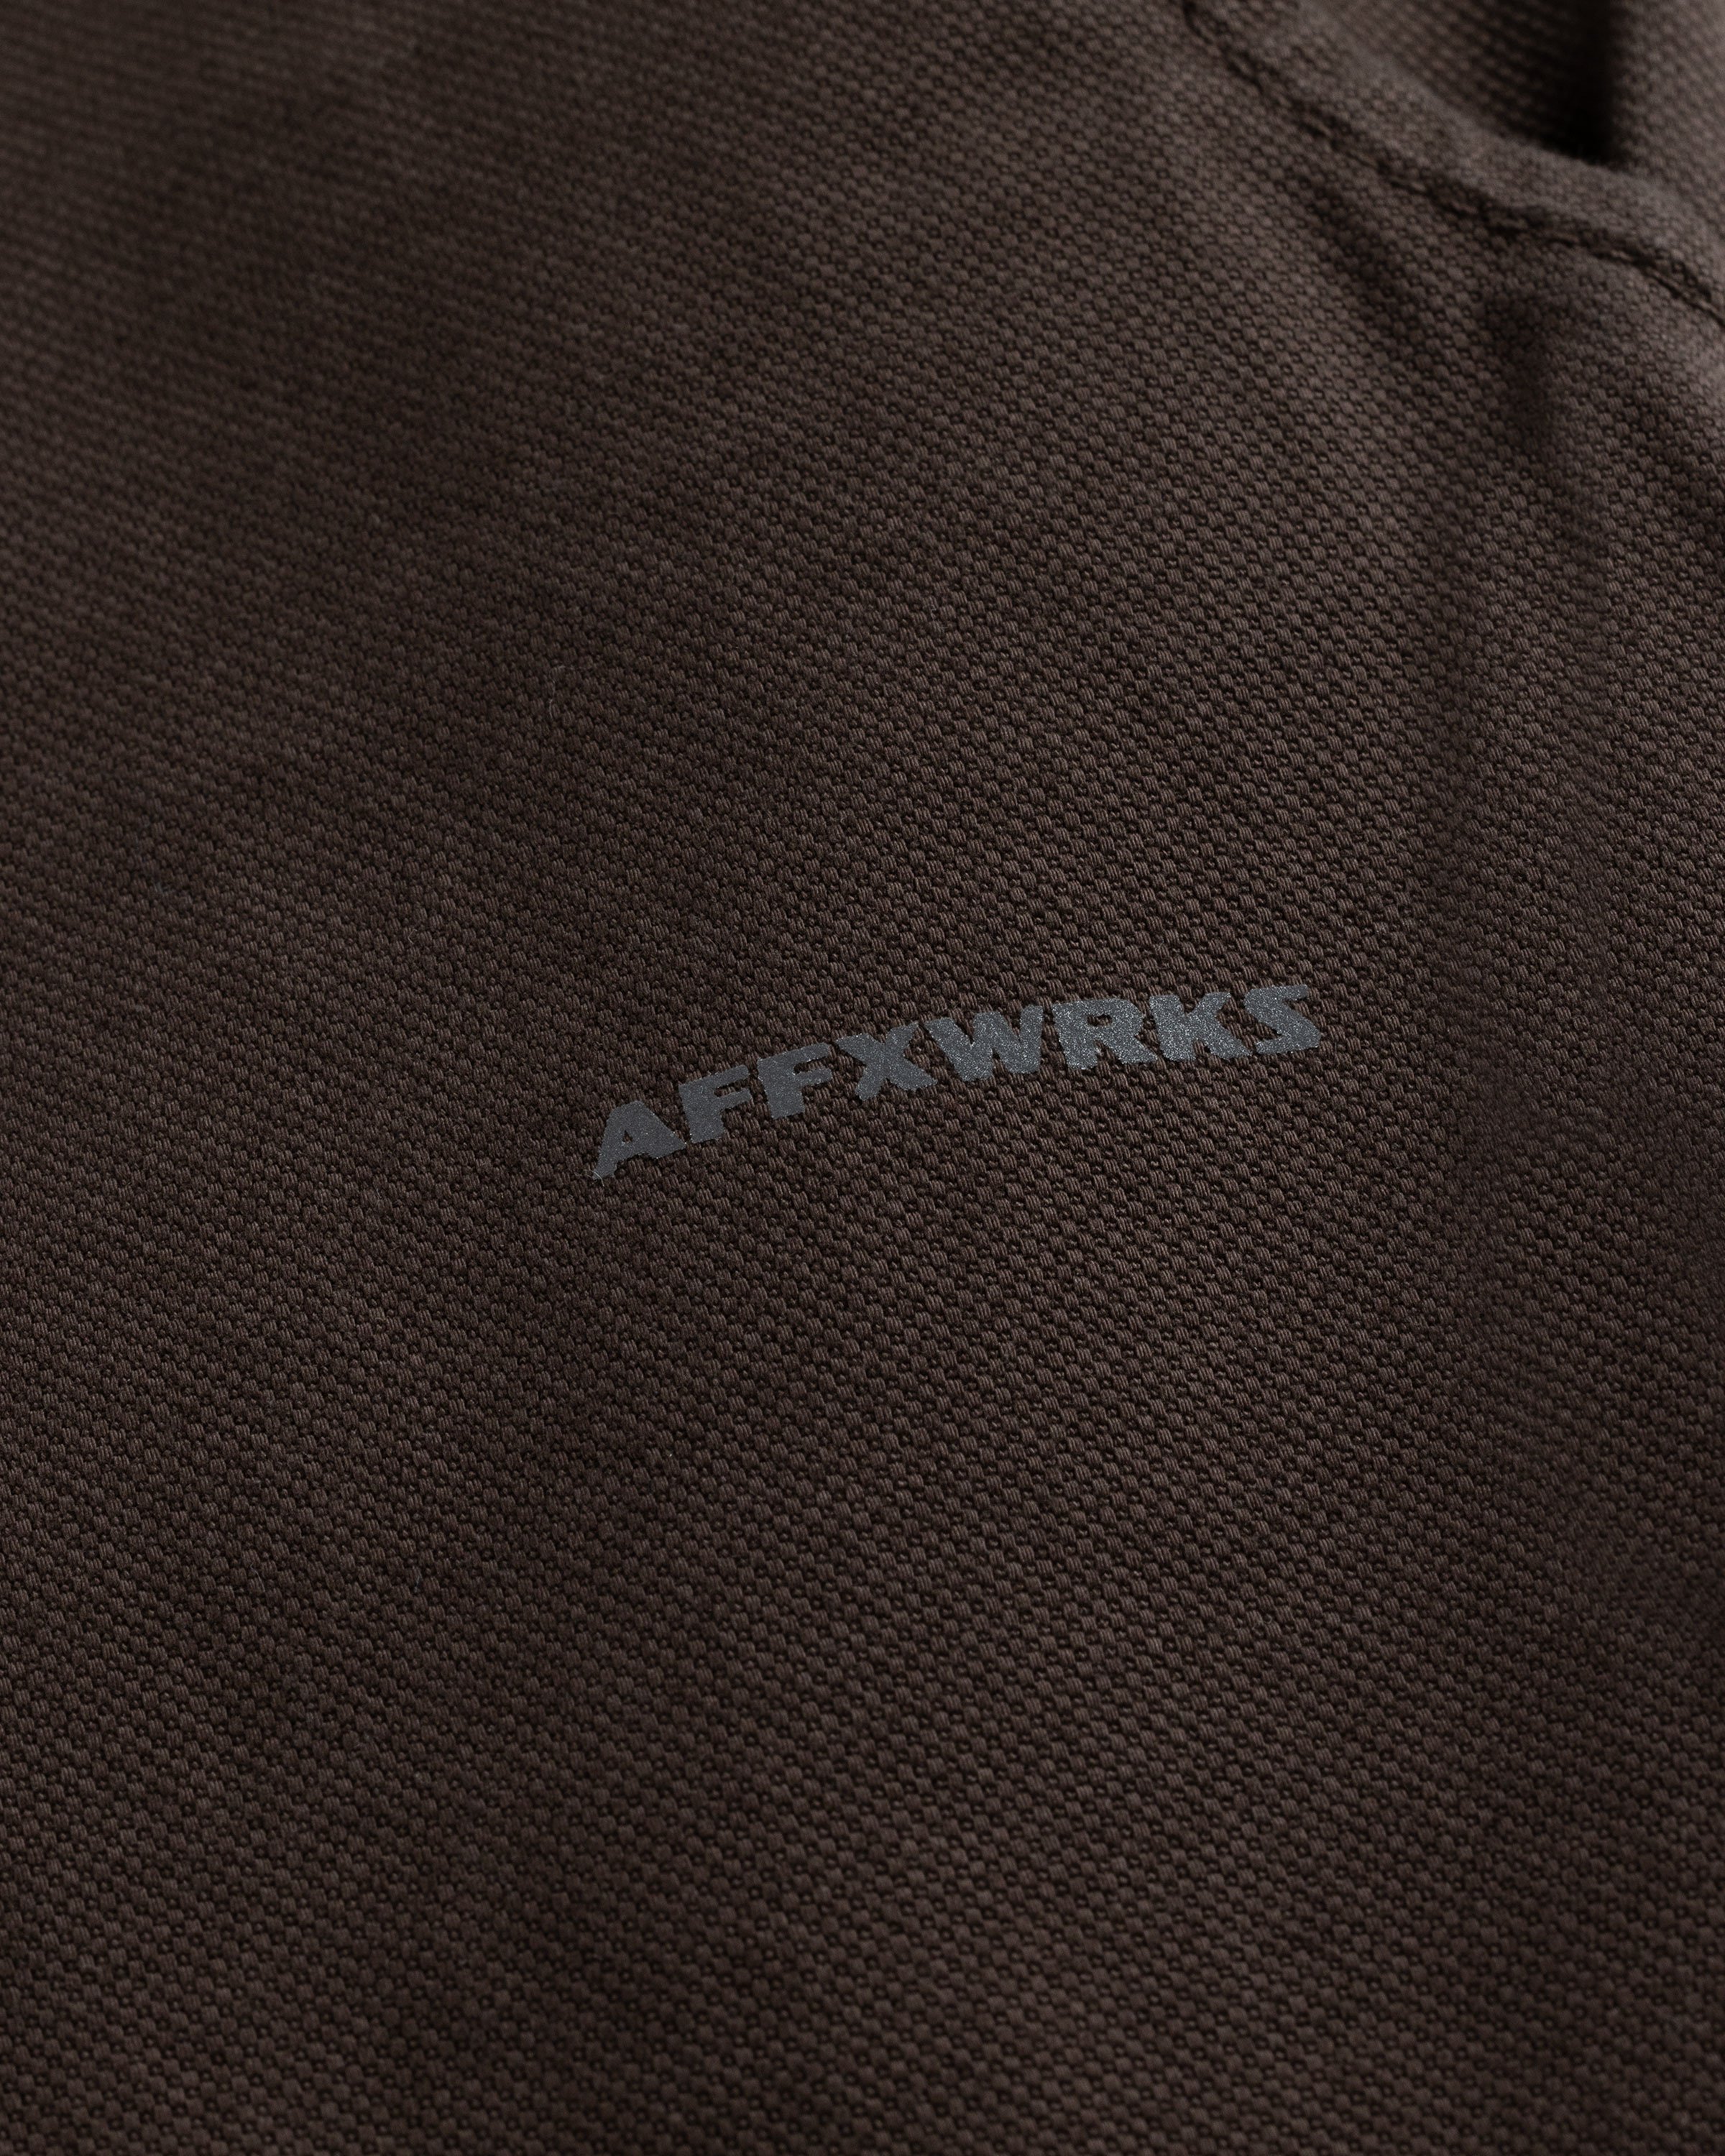 AFFXWRKS - WRKS Pant Washed Brown - Clothing - Brown - Image 7